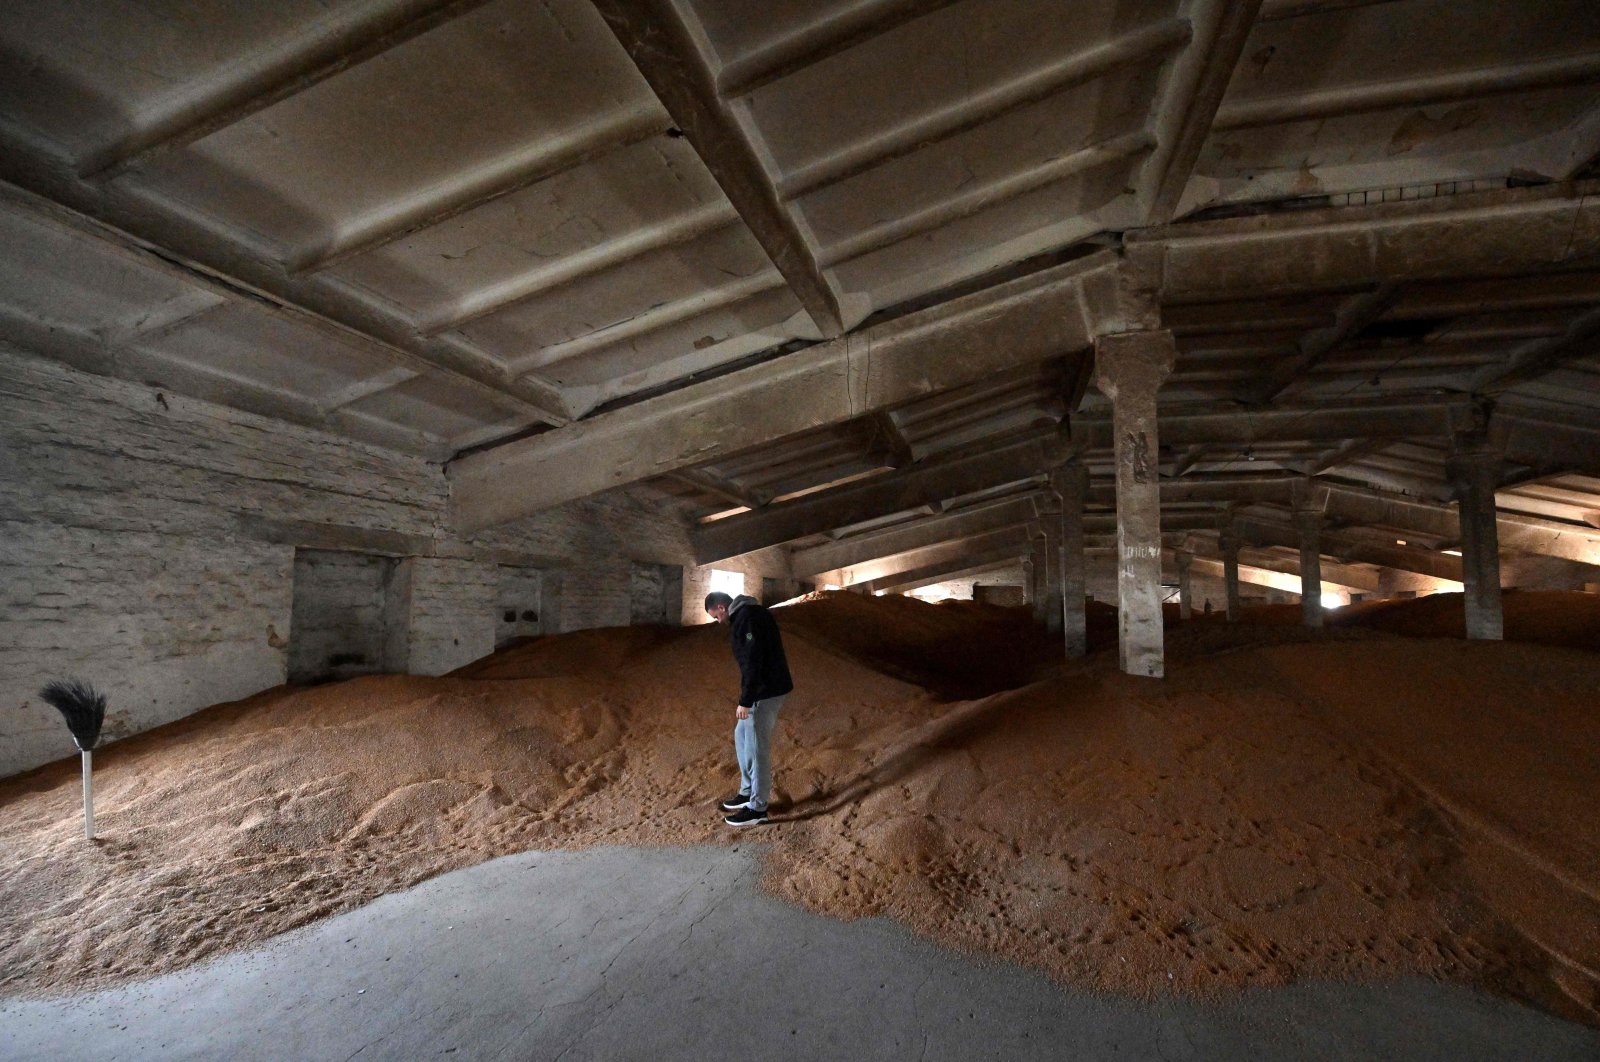 Petro Potapenko examines remnants of unsold grain in the storage of his farm in Kyiv region, Ukraine, April 19, 2023. (AFP Photo)